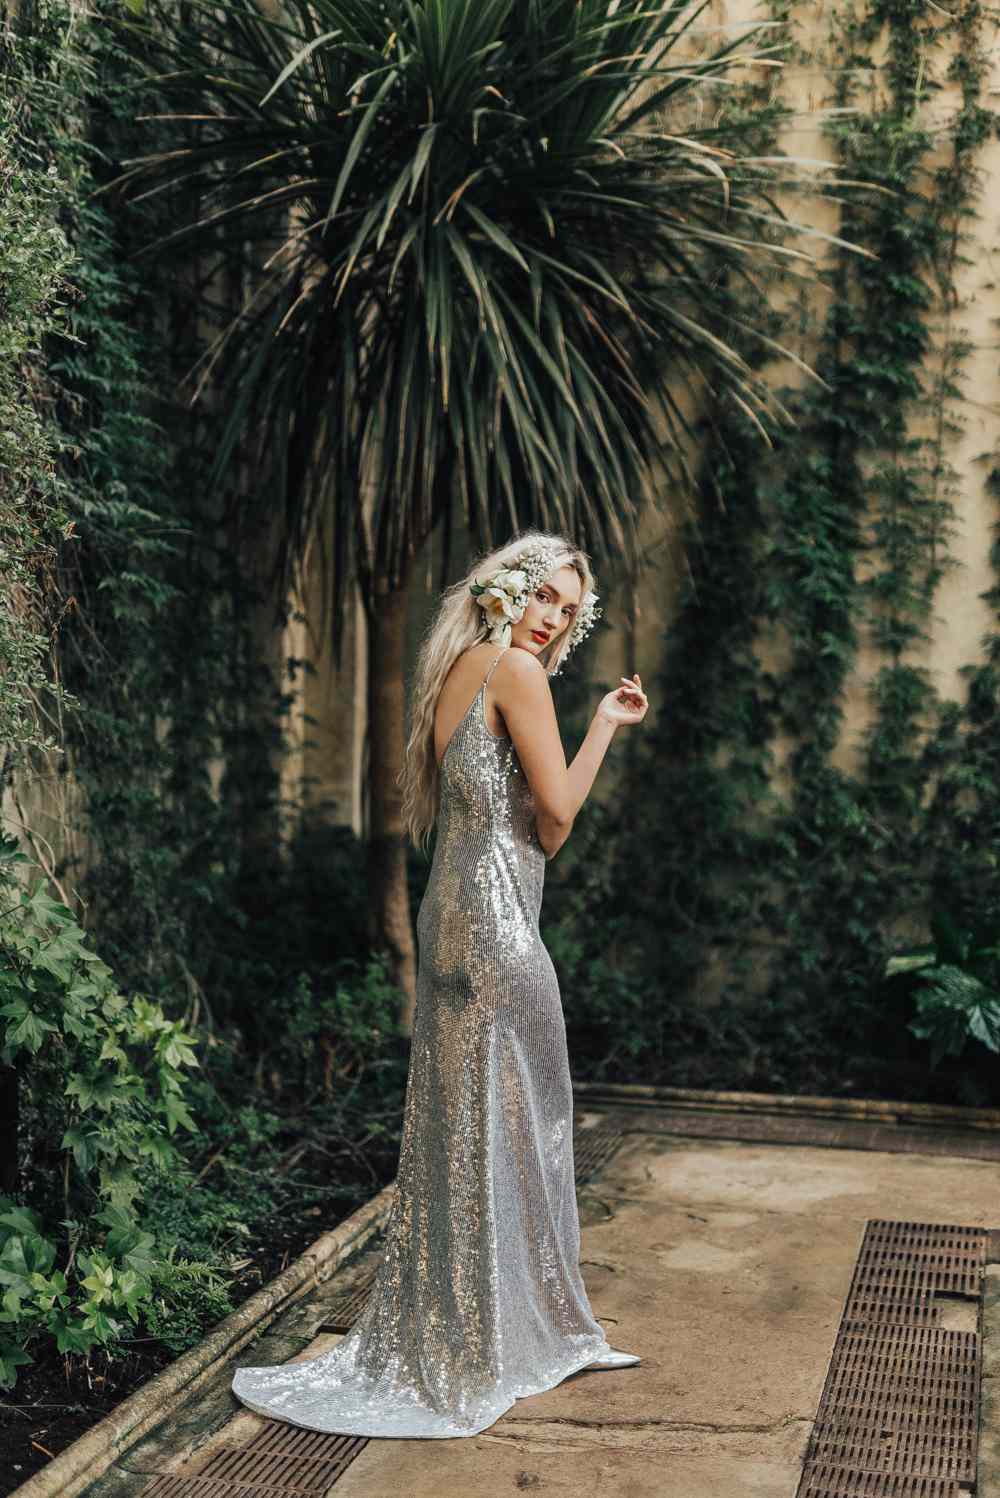 Model in a secret garden wearing a silver wedding gown with flowers in her hair